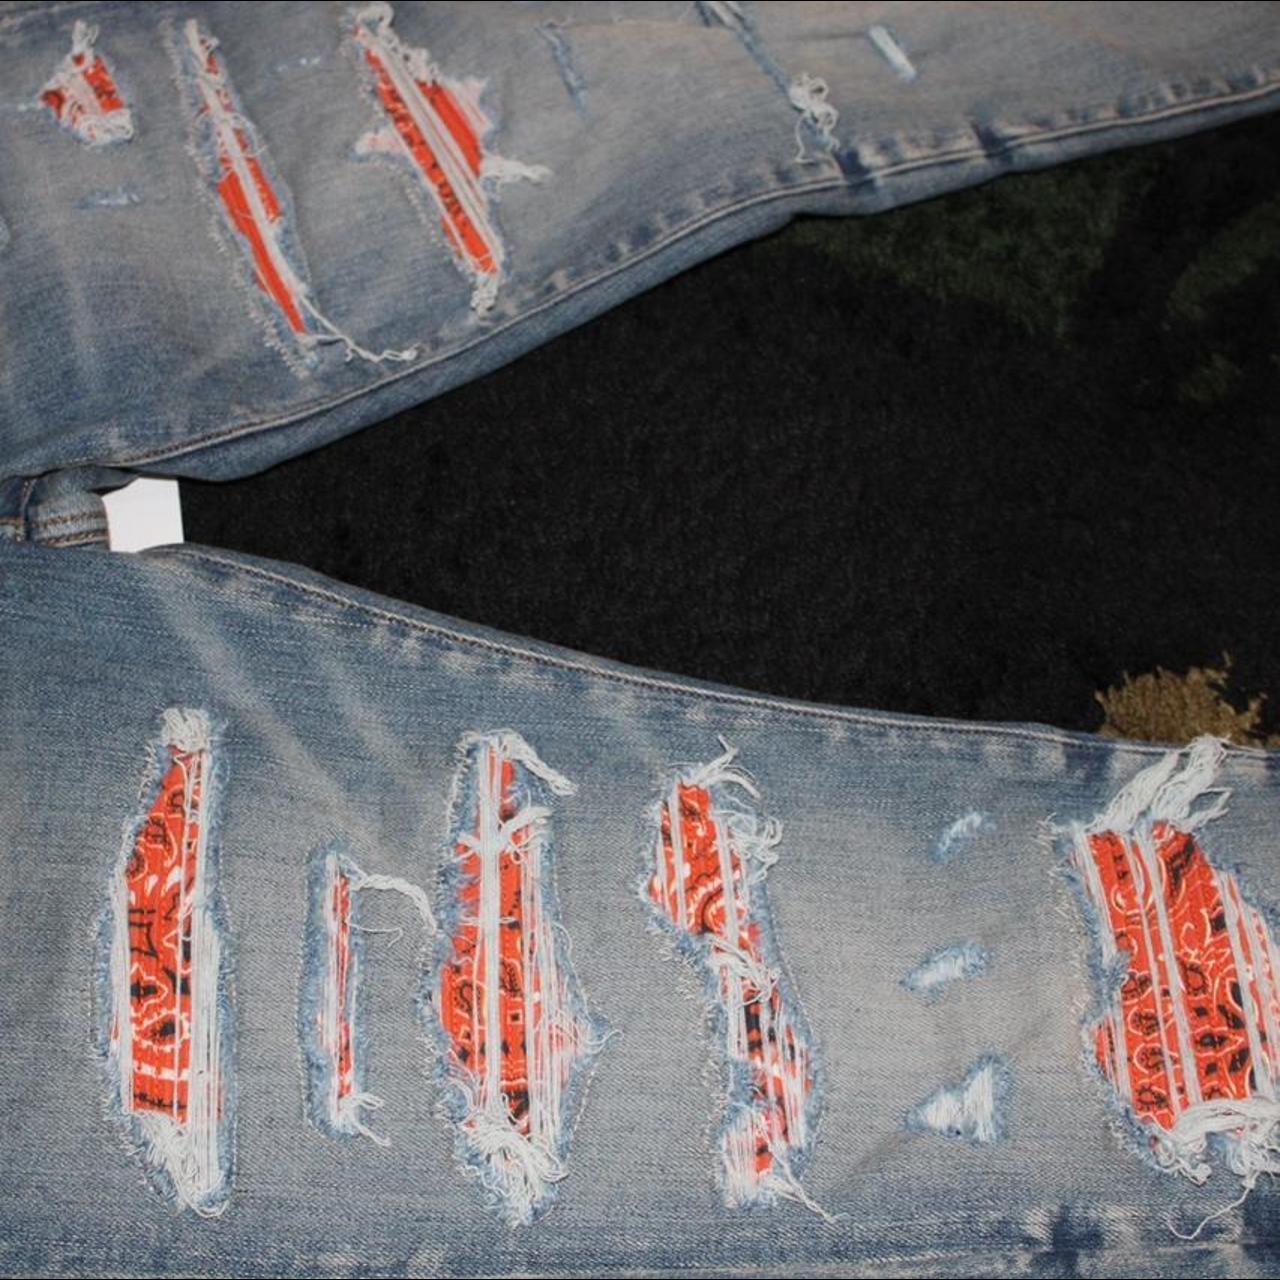 Product Image 2 - Amiri bandana skinny jeans

Details
Inseam: 34"
Rise: